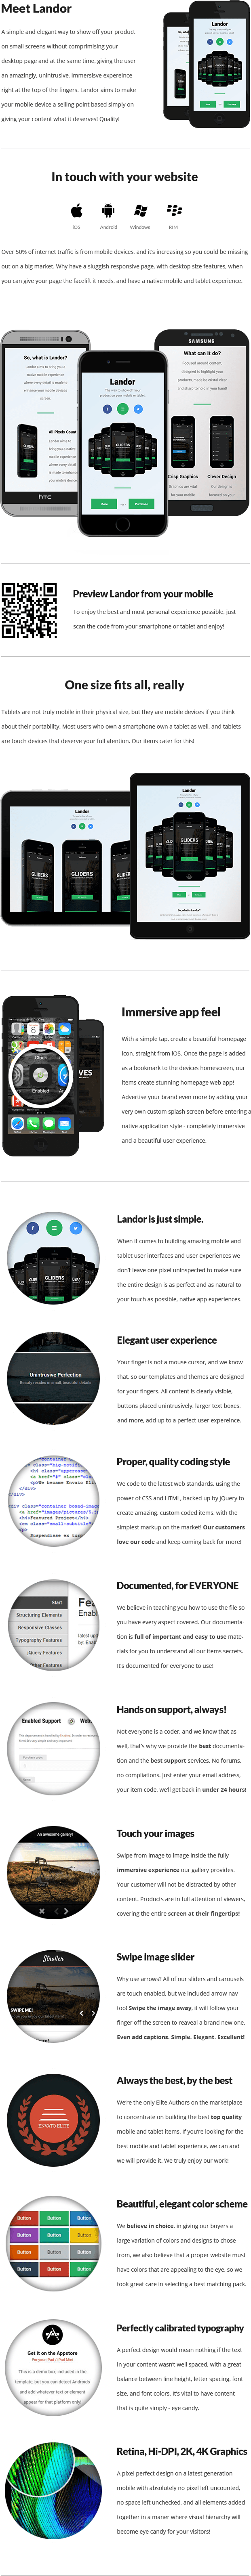 Landor Mobile | Mobile Template - 9